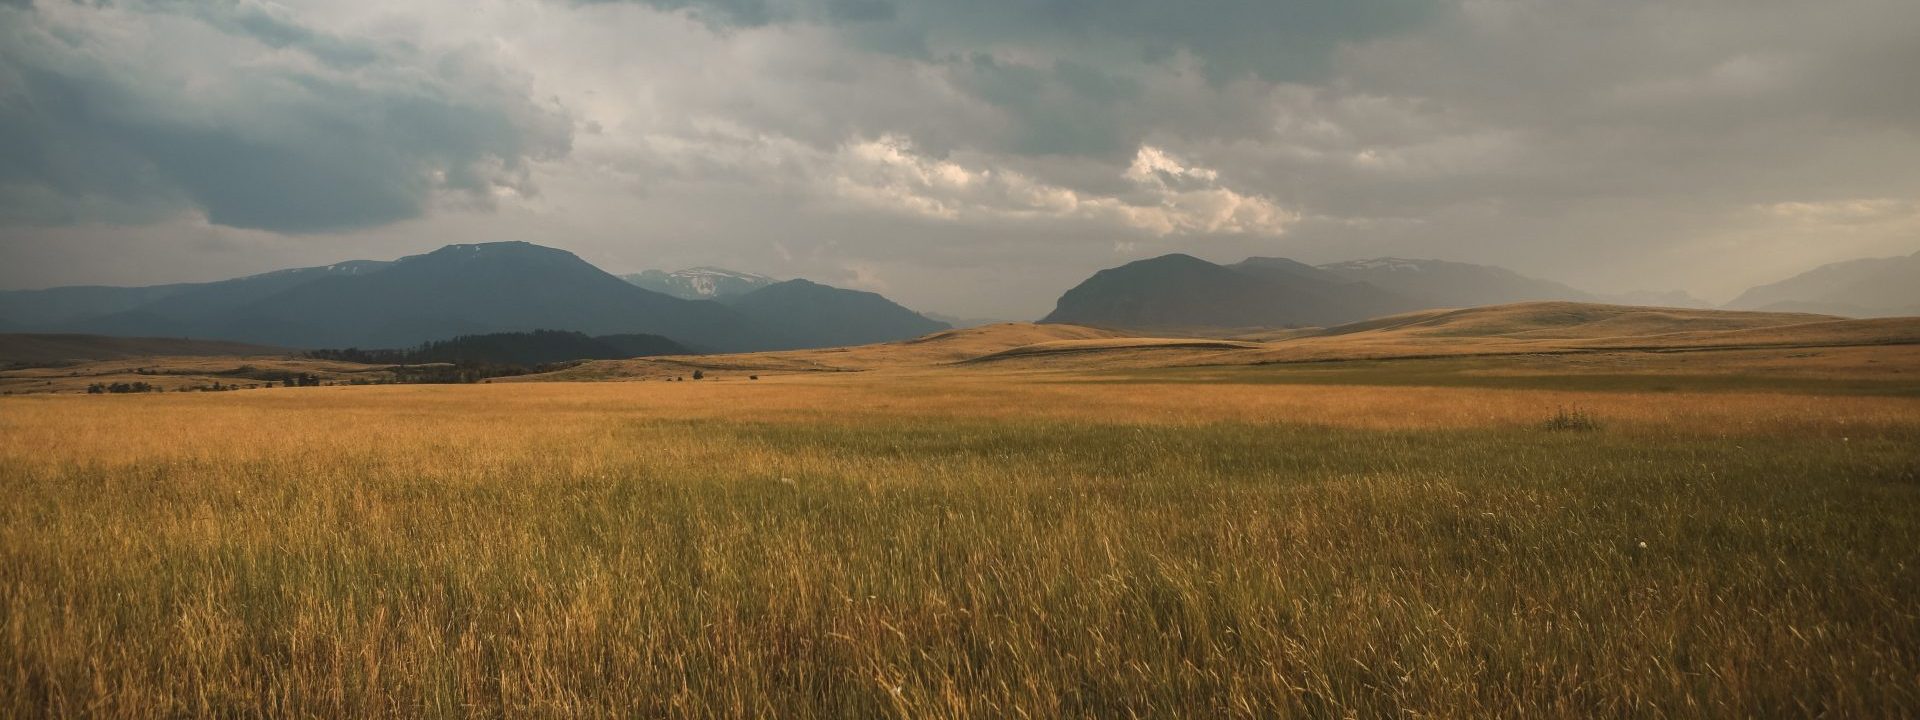 Montana Field + Cloudy